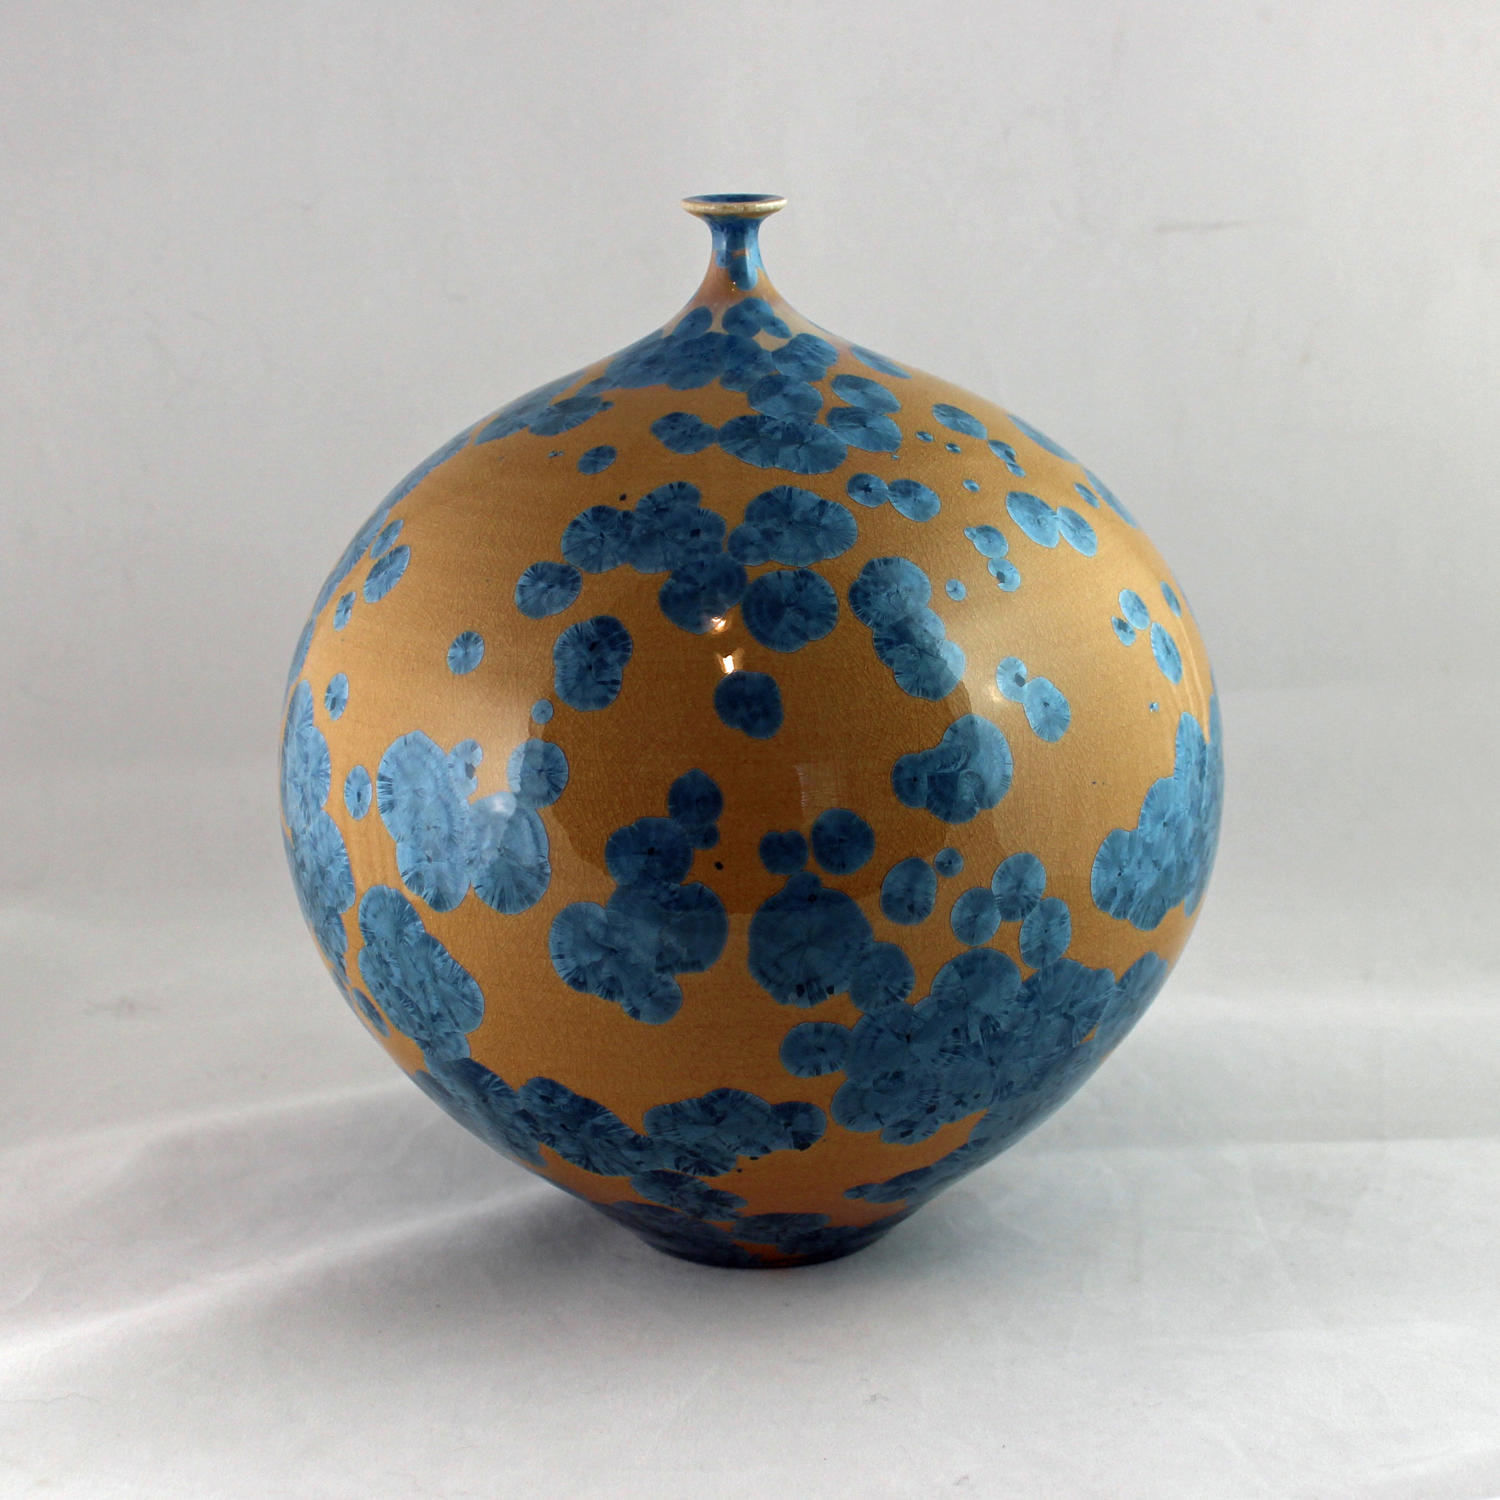 Hideaki Miyamura, Vase with Yellow Crystalline Glaze